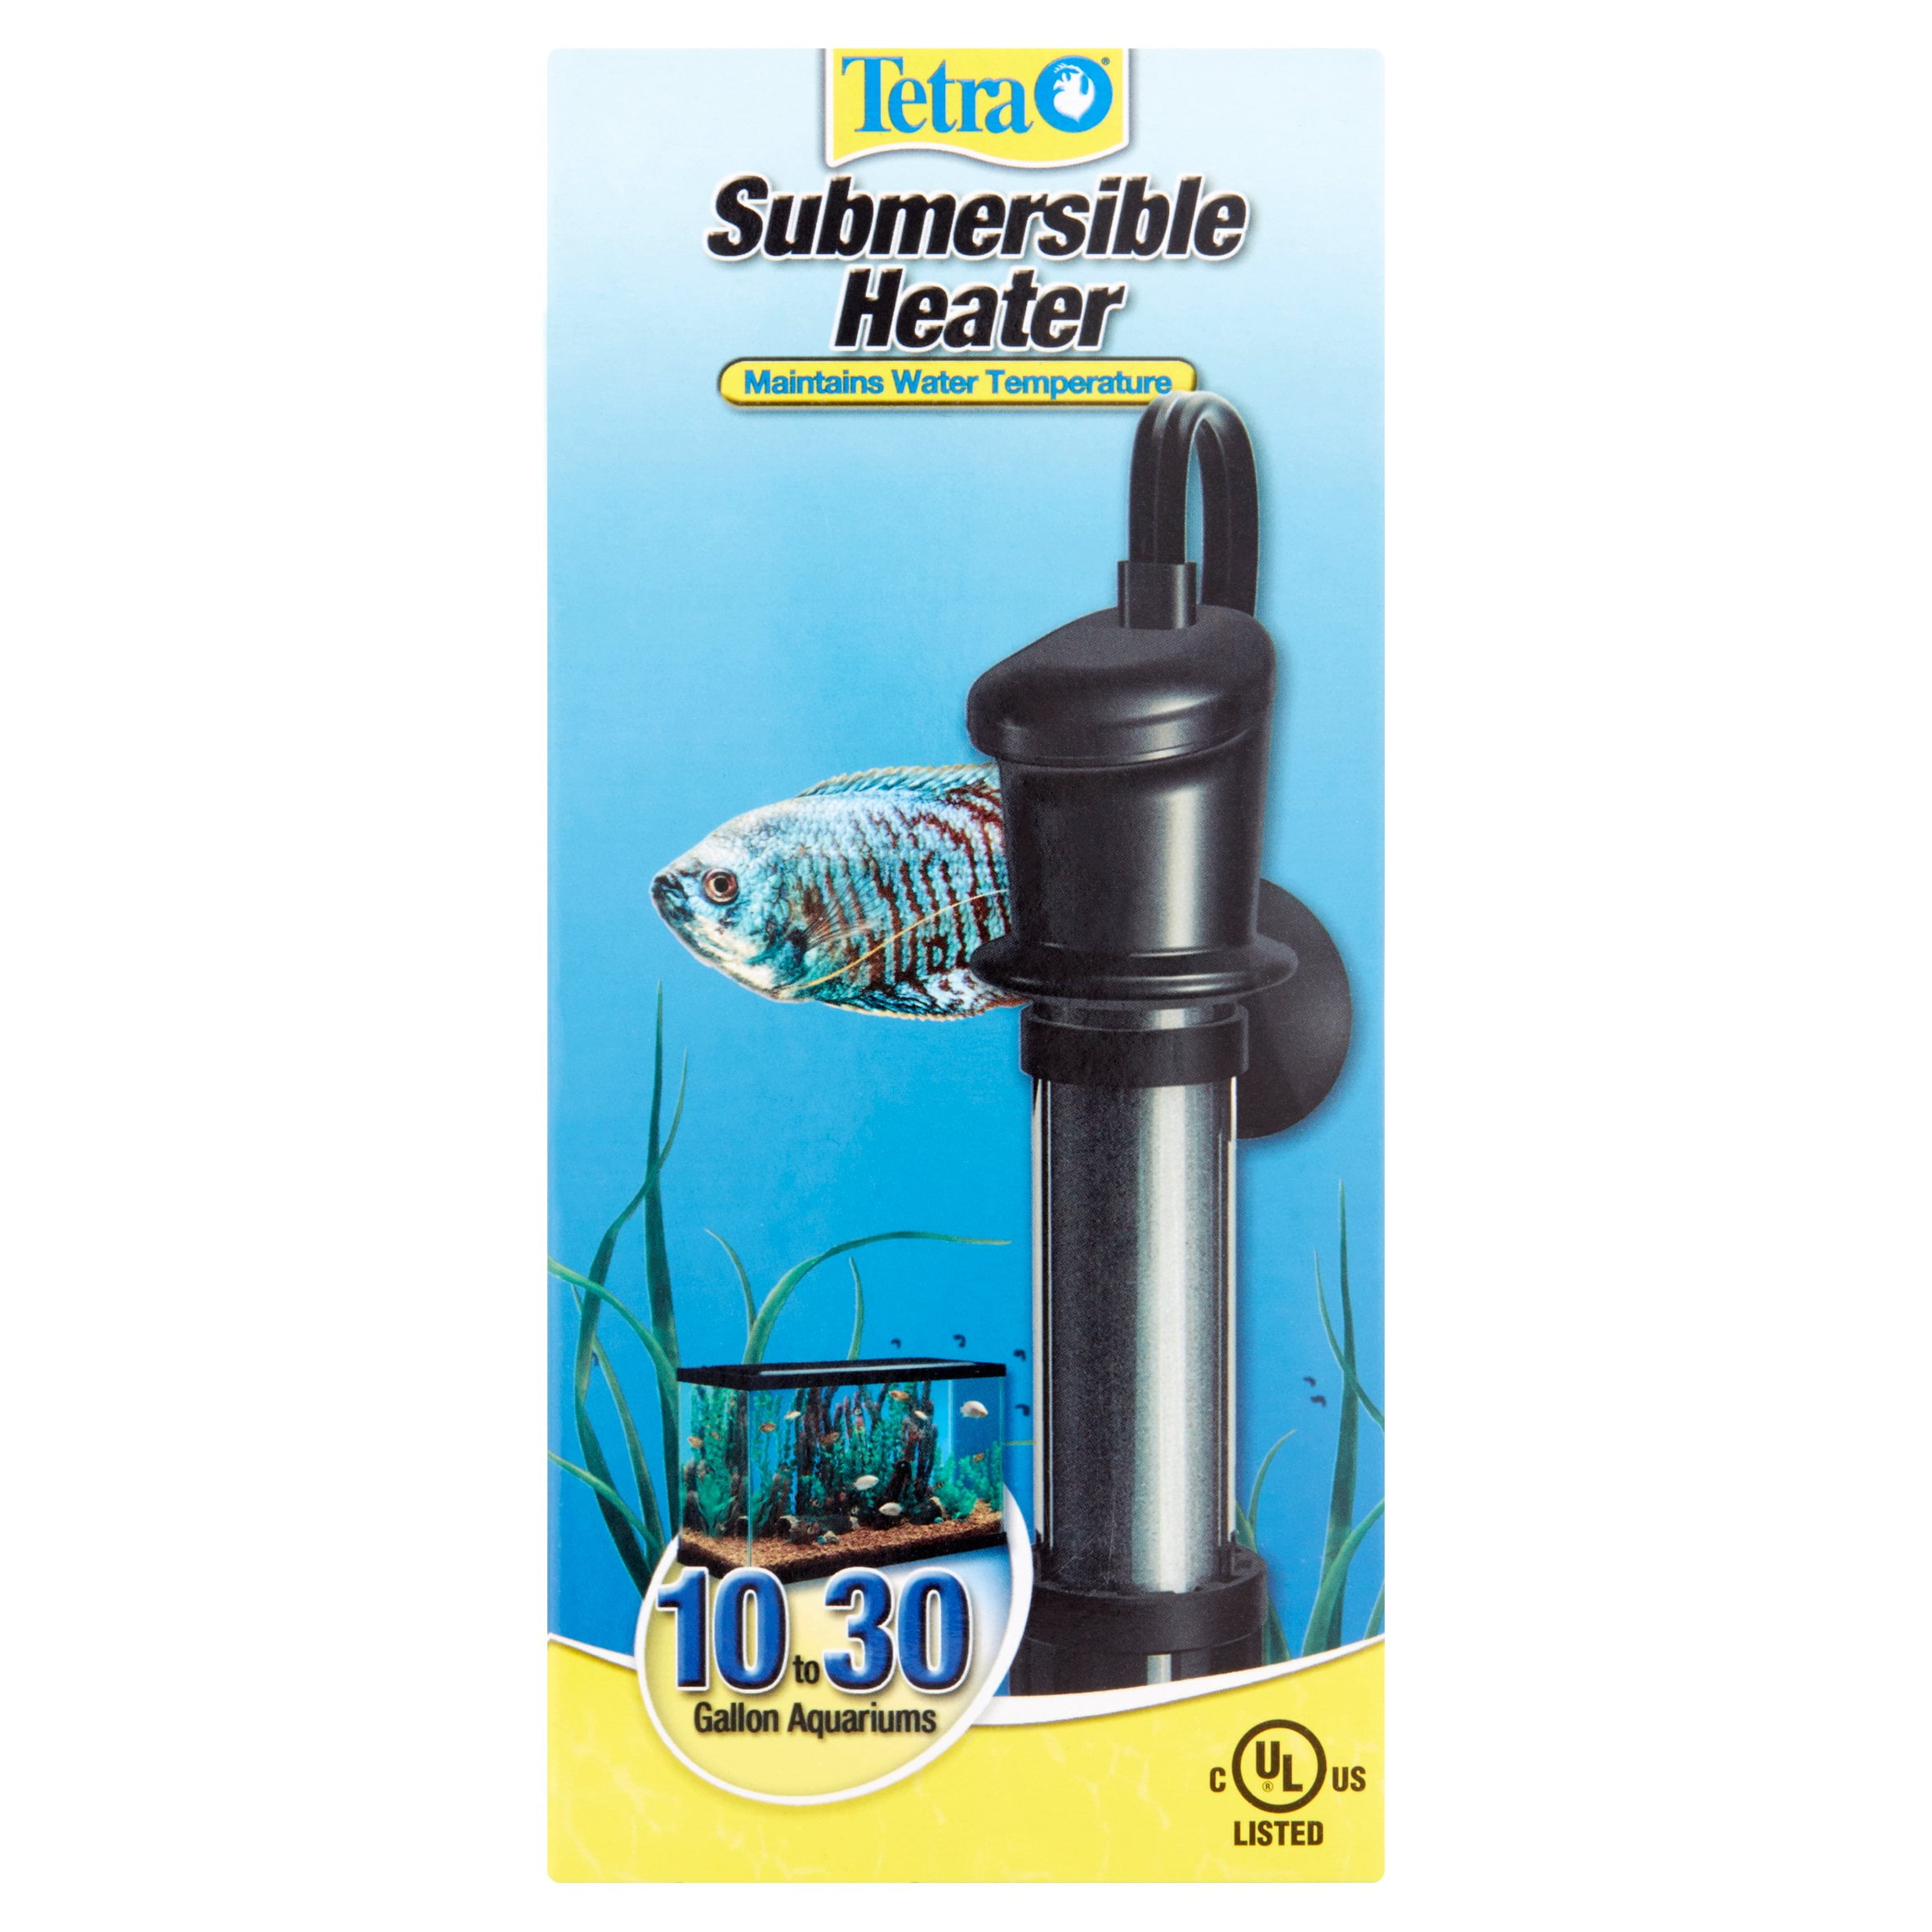 Tetra Submersible Aquarium Tank Heater, 1030 Gallon, 100